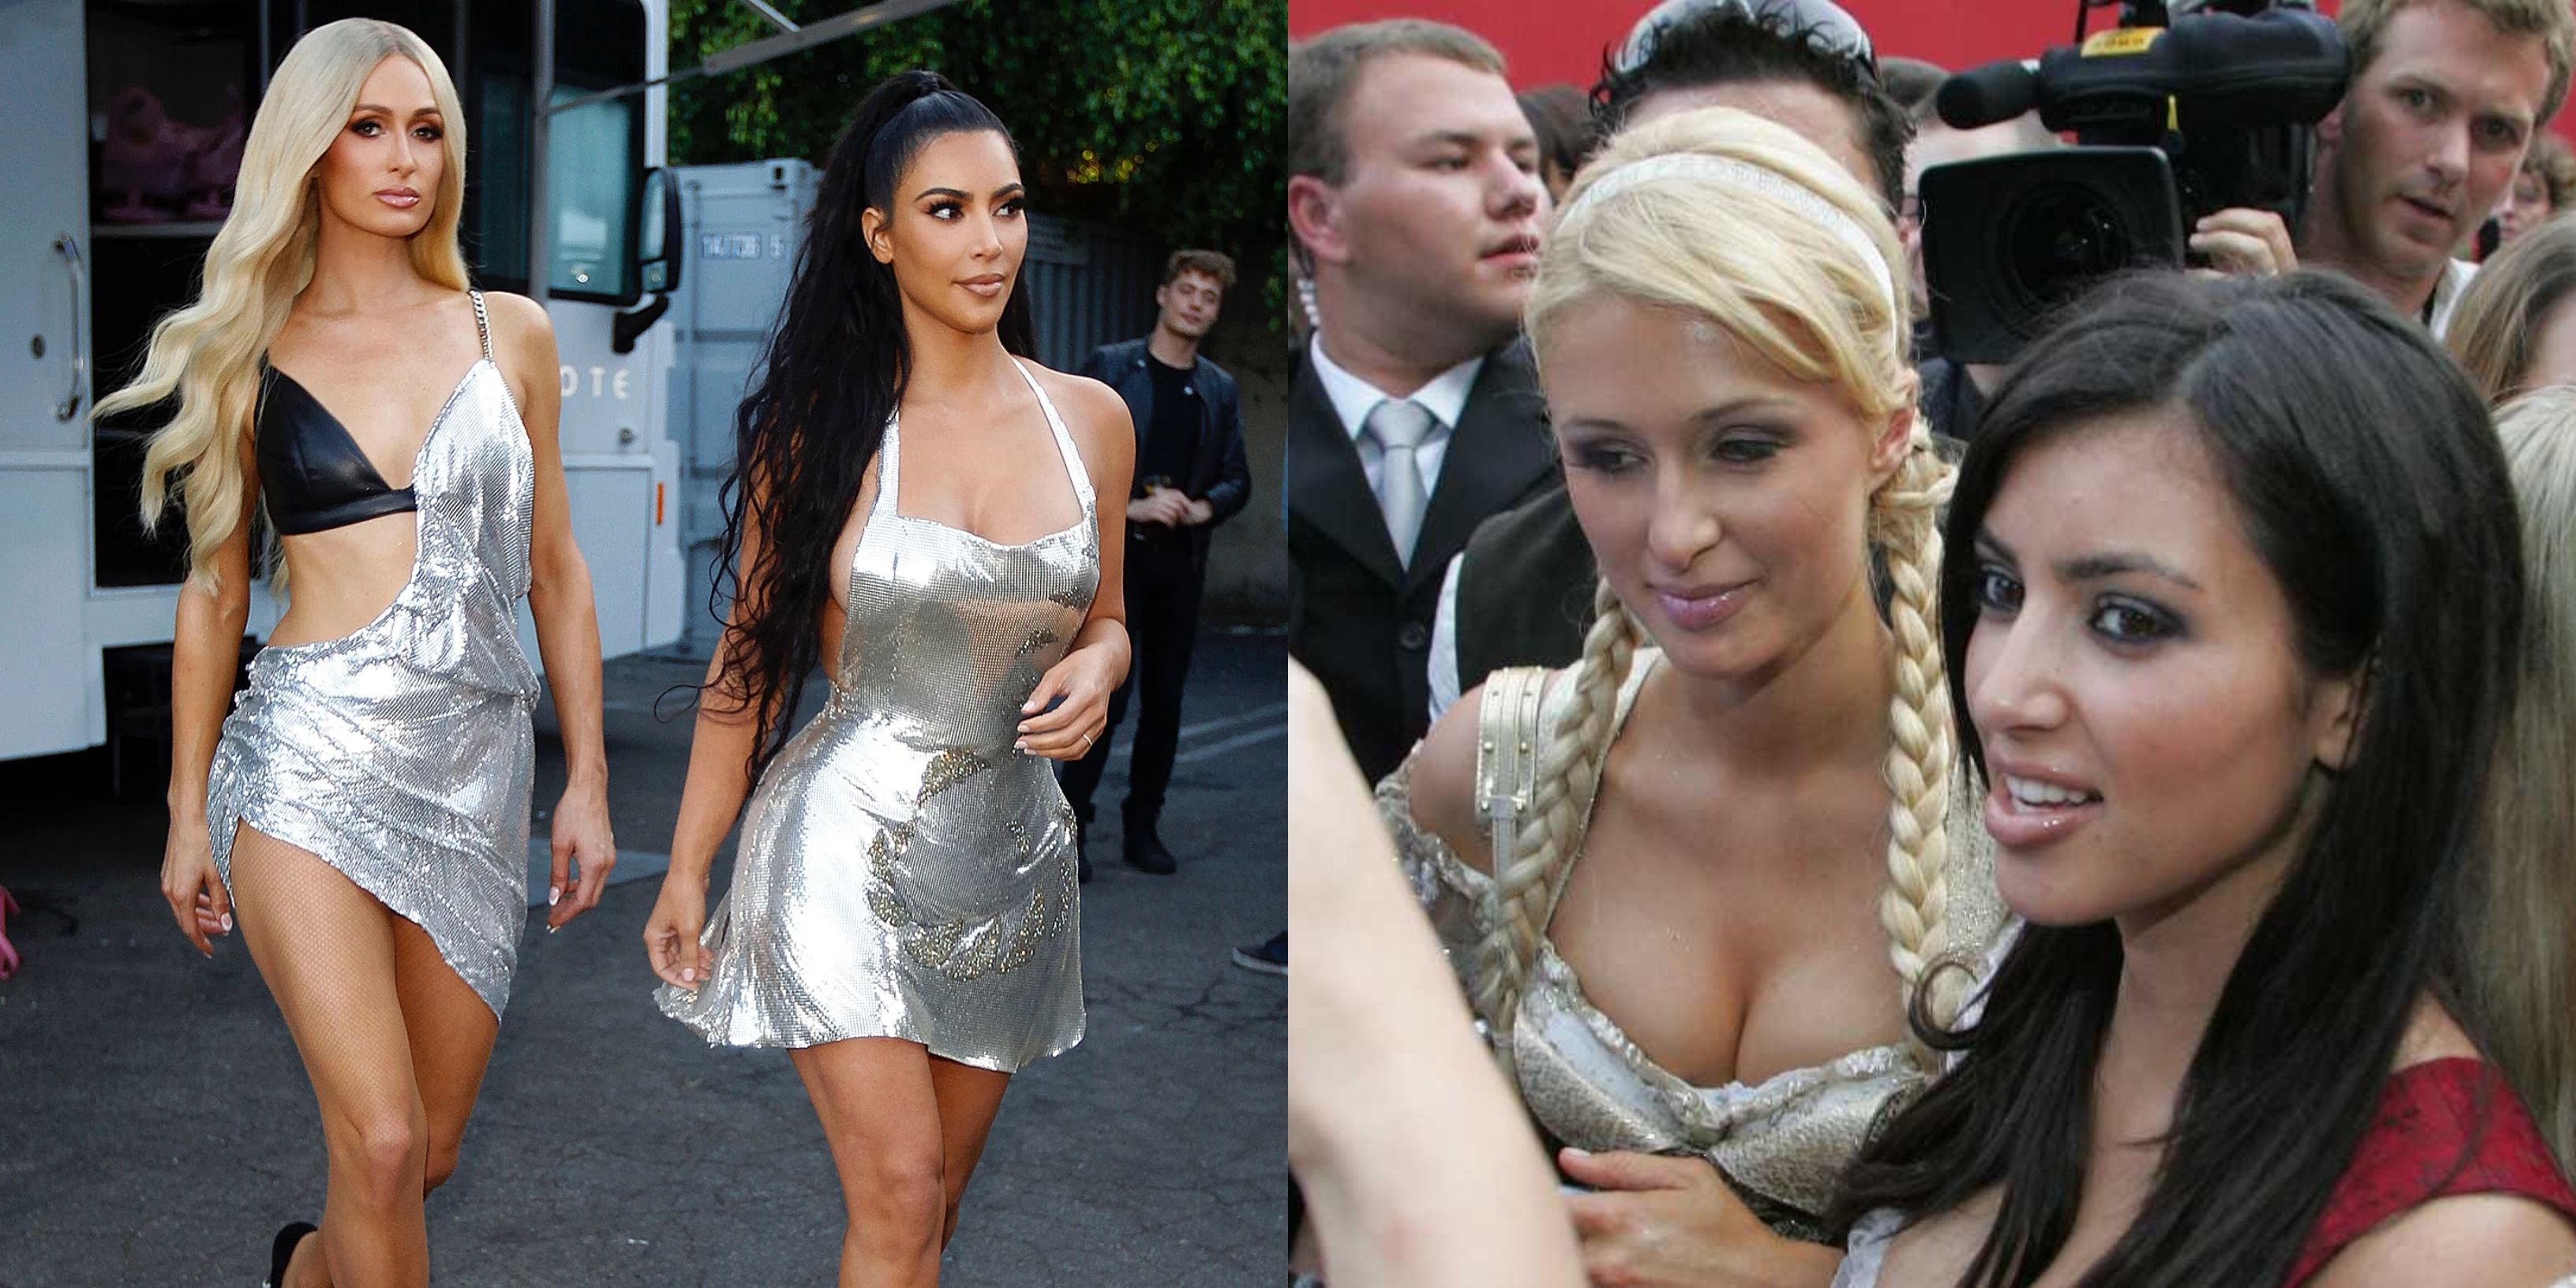 TBT: See Photos of Paris Hilton and Kim Kardashian When They Were